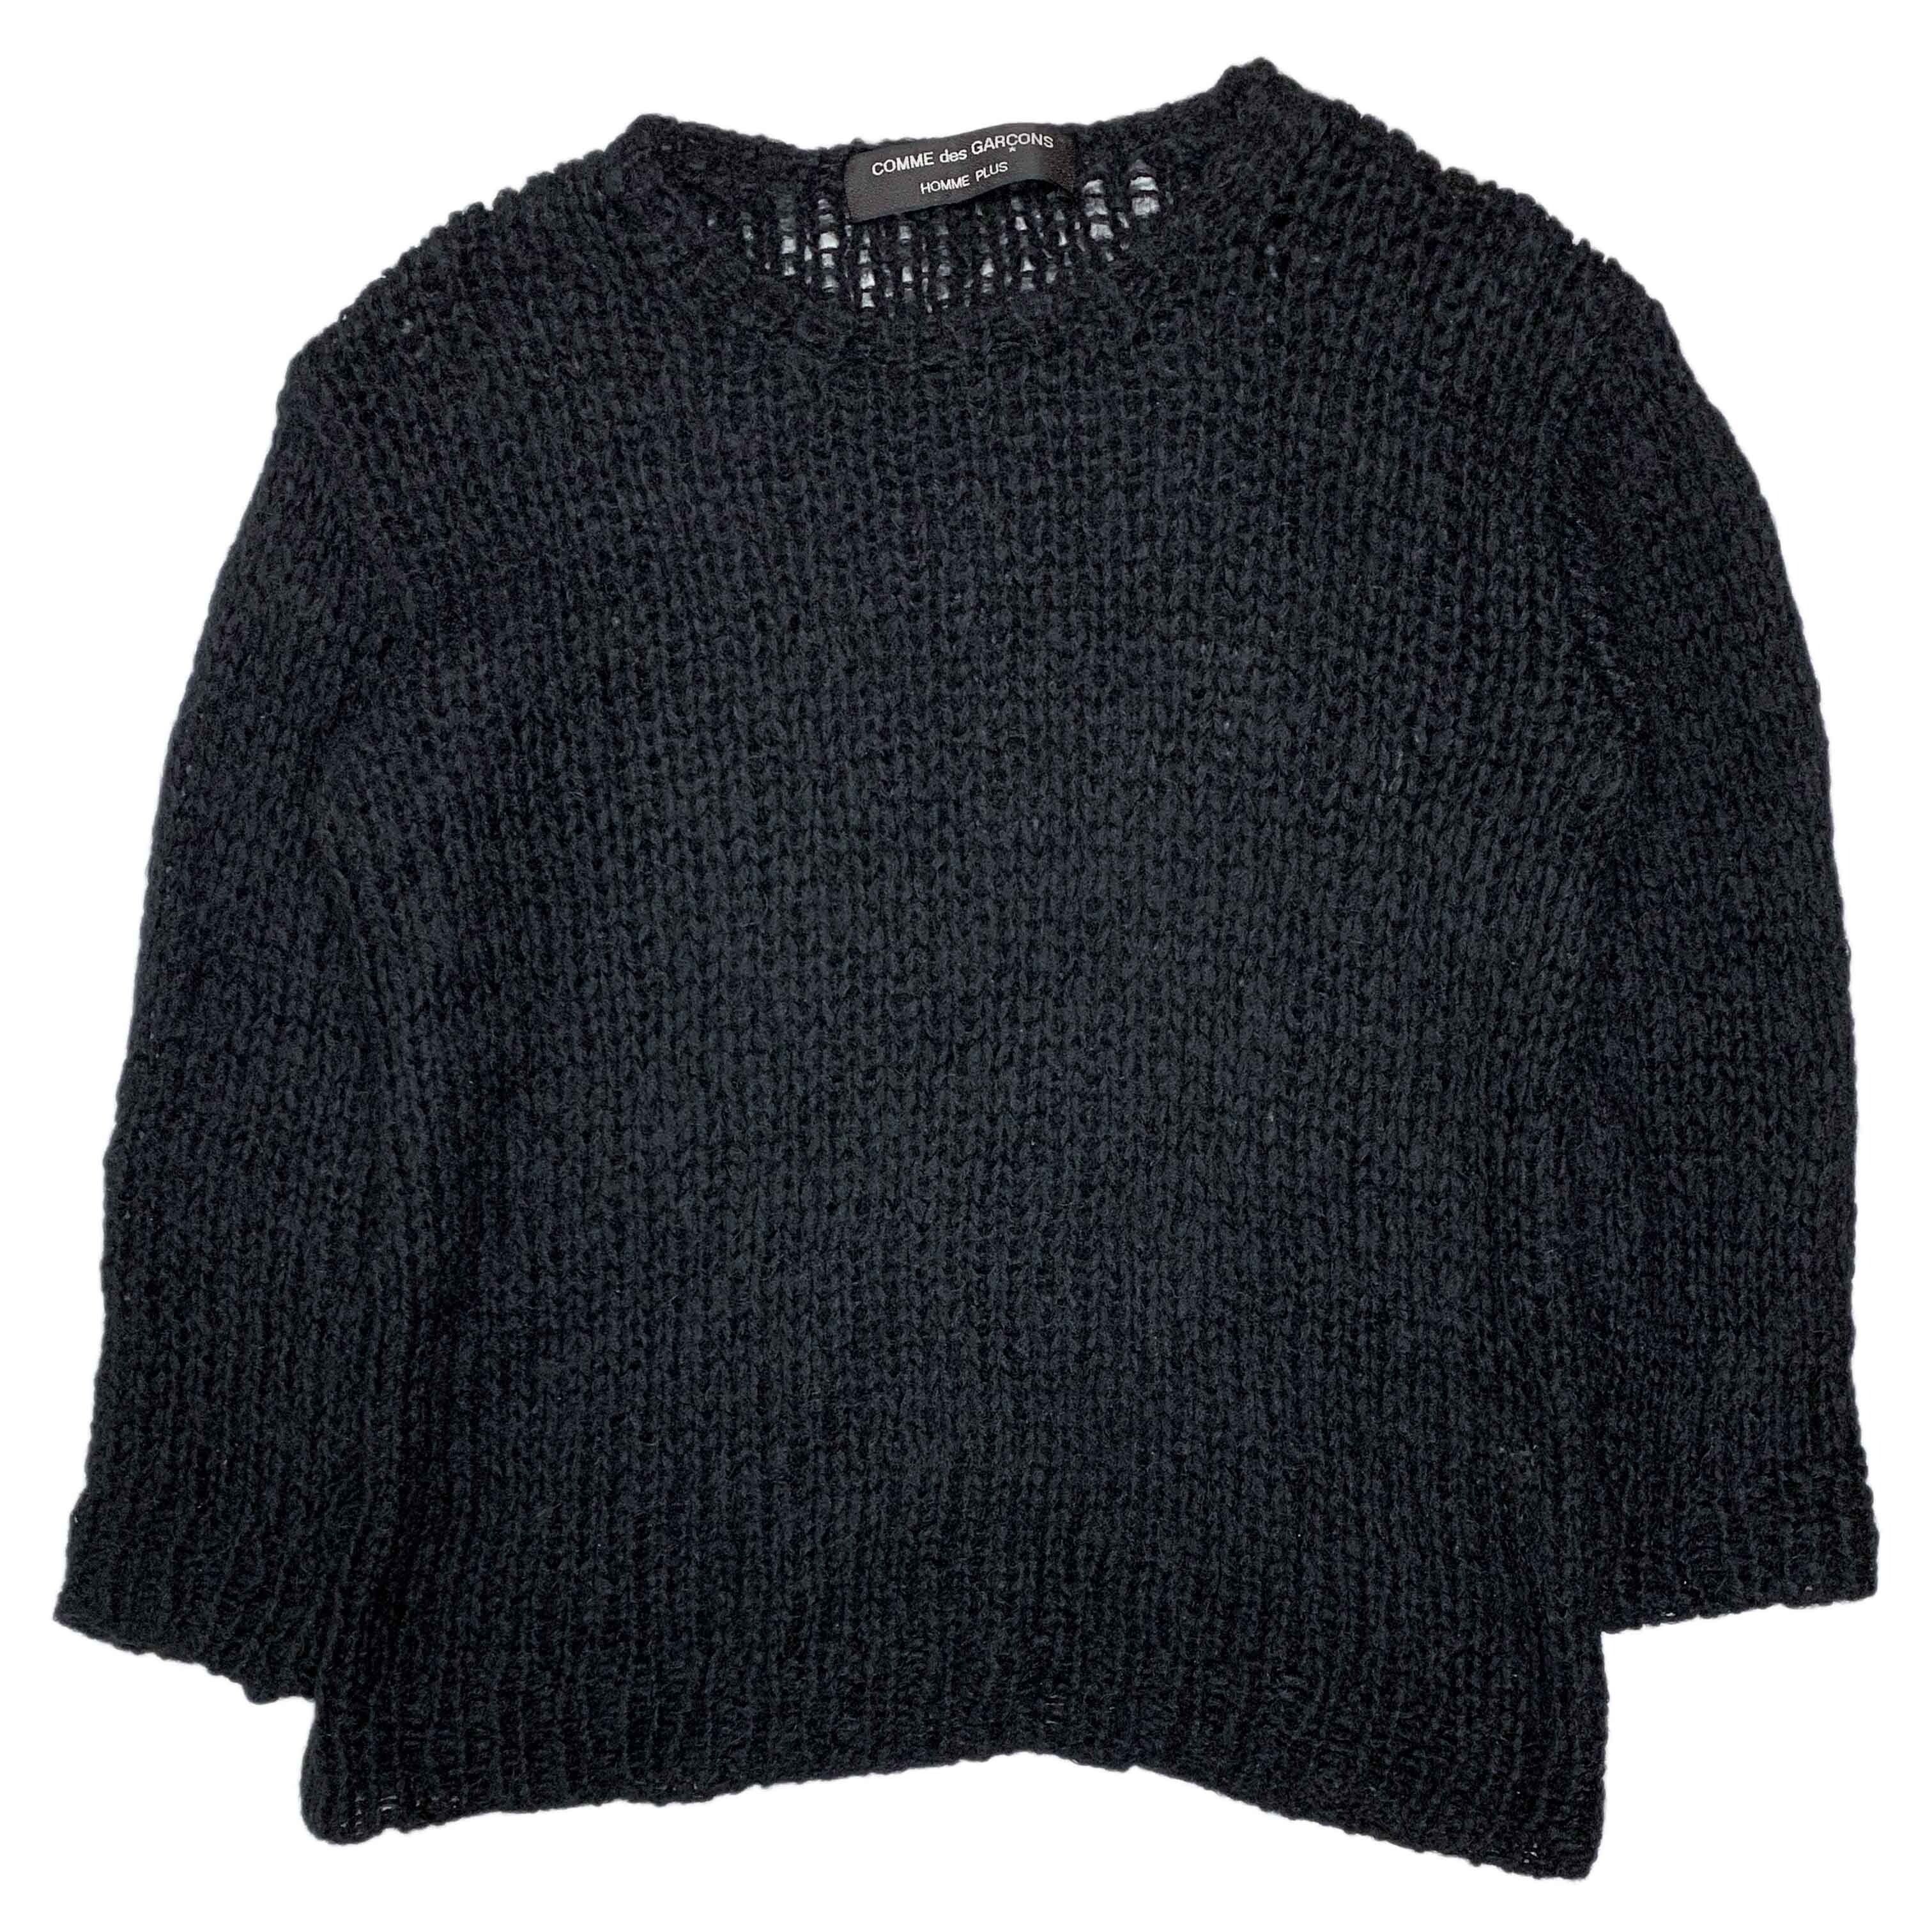 AW91 Mesh Knit Wool Sweater - 1